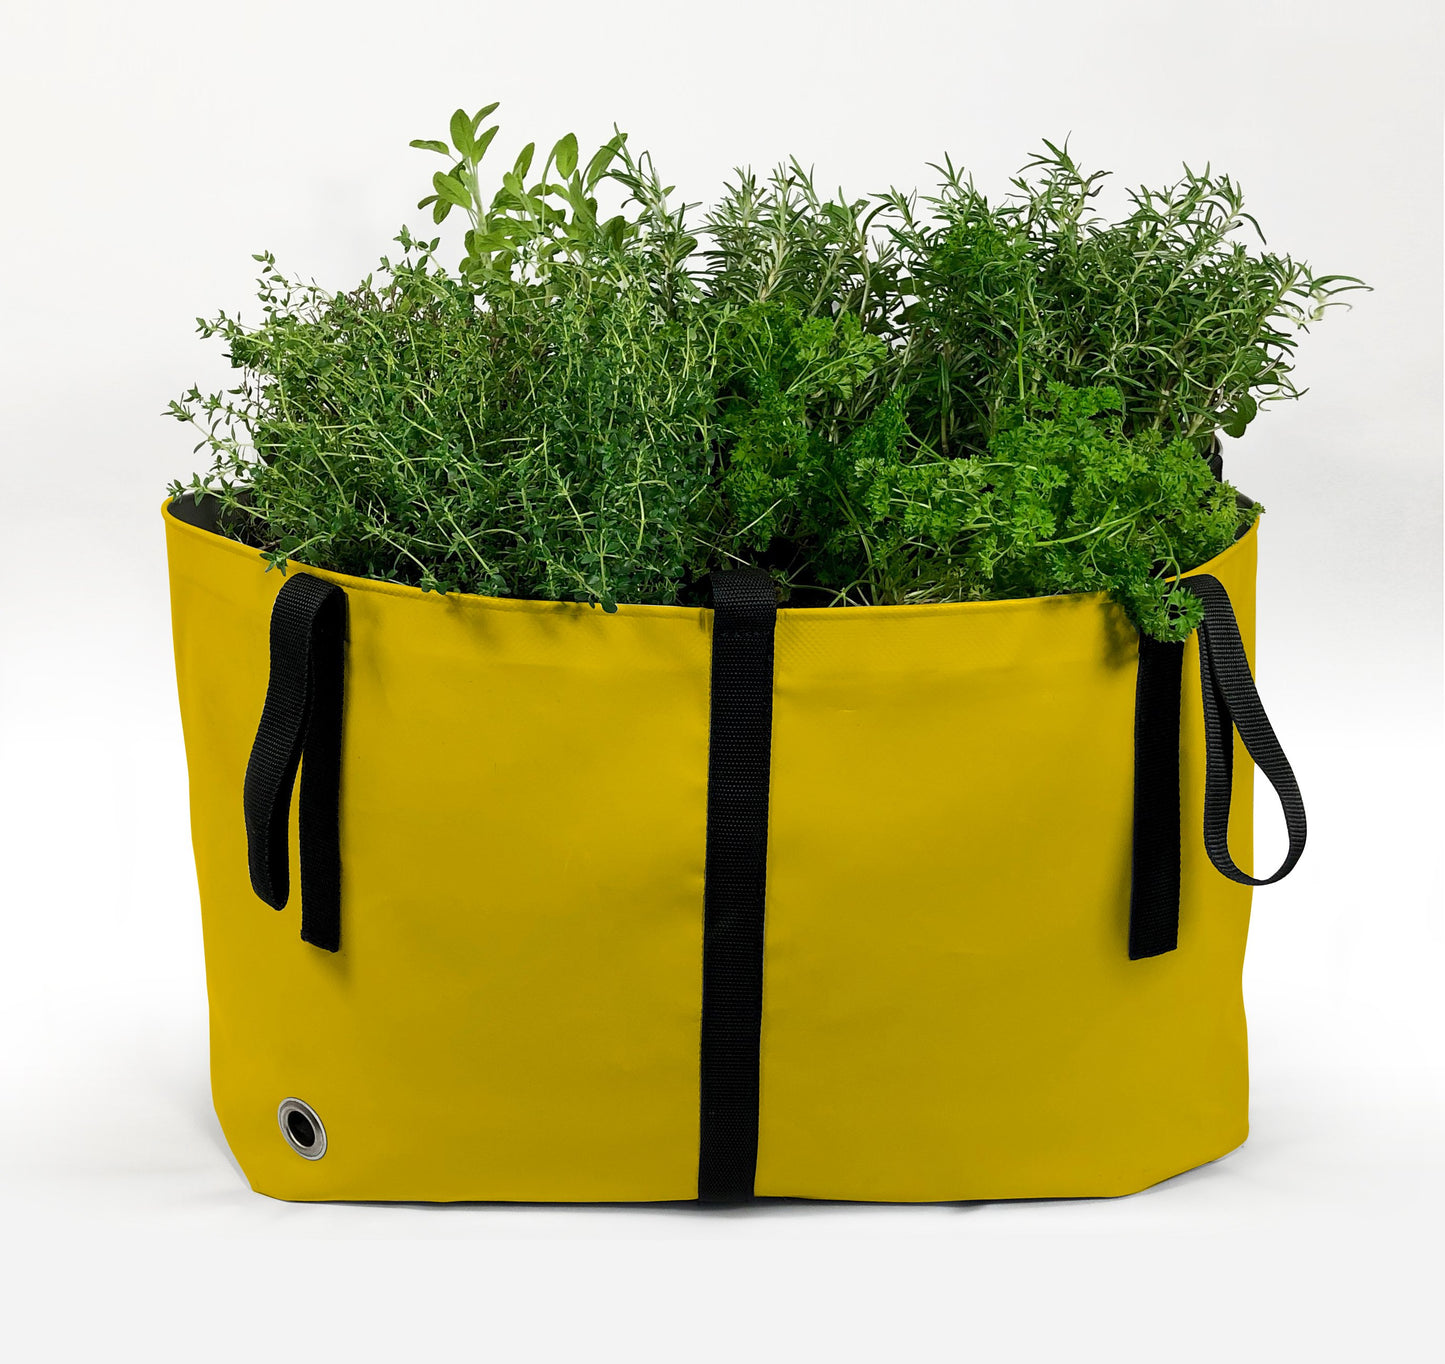 The Green Bag - Horta Urbana - Tamanho M